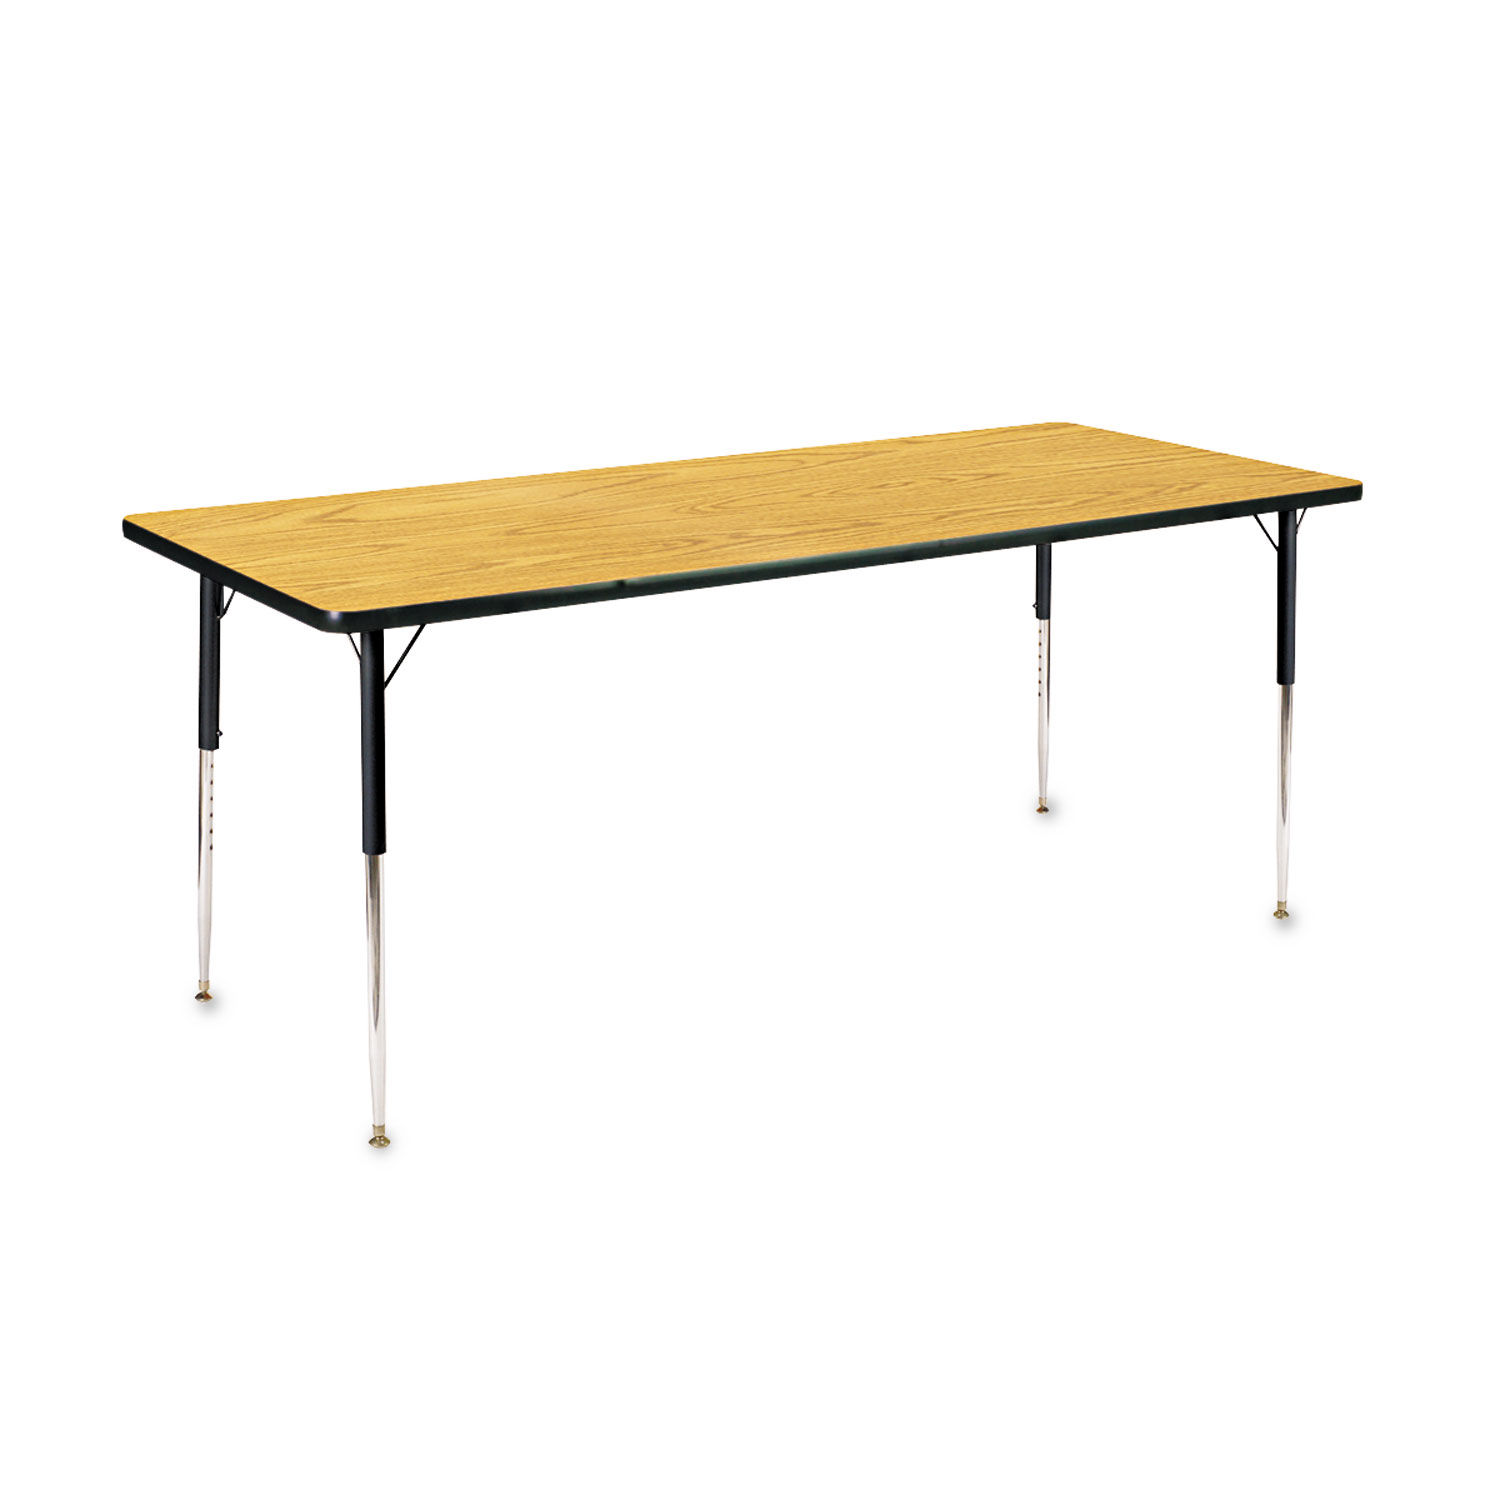 4000 Series Rectangular Activity Table, 36w x 60d x 30h, Medium Oak/Chrome